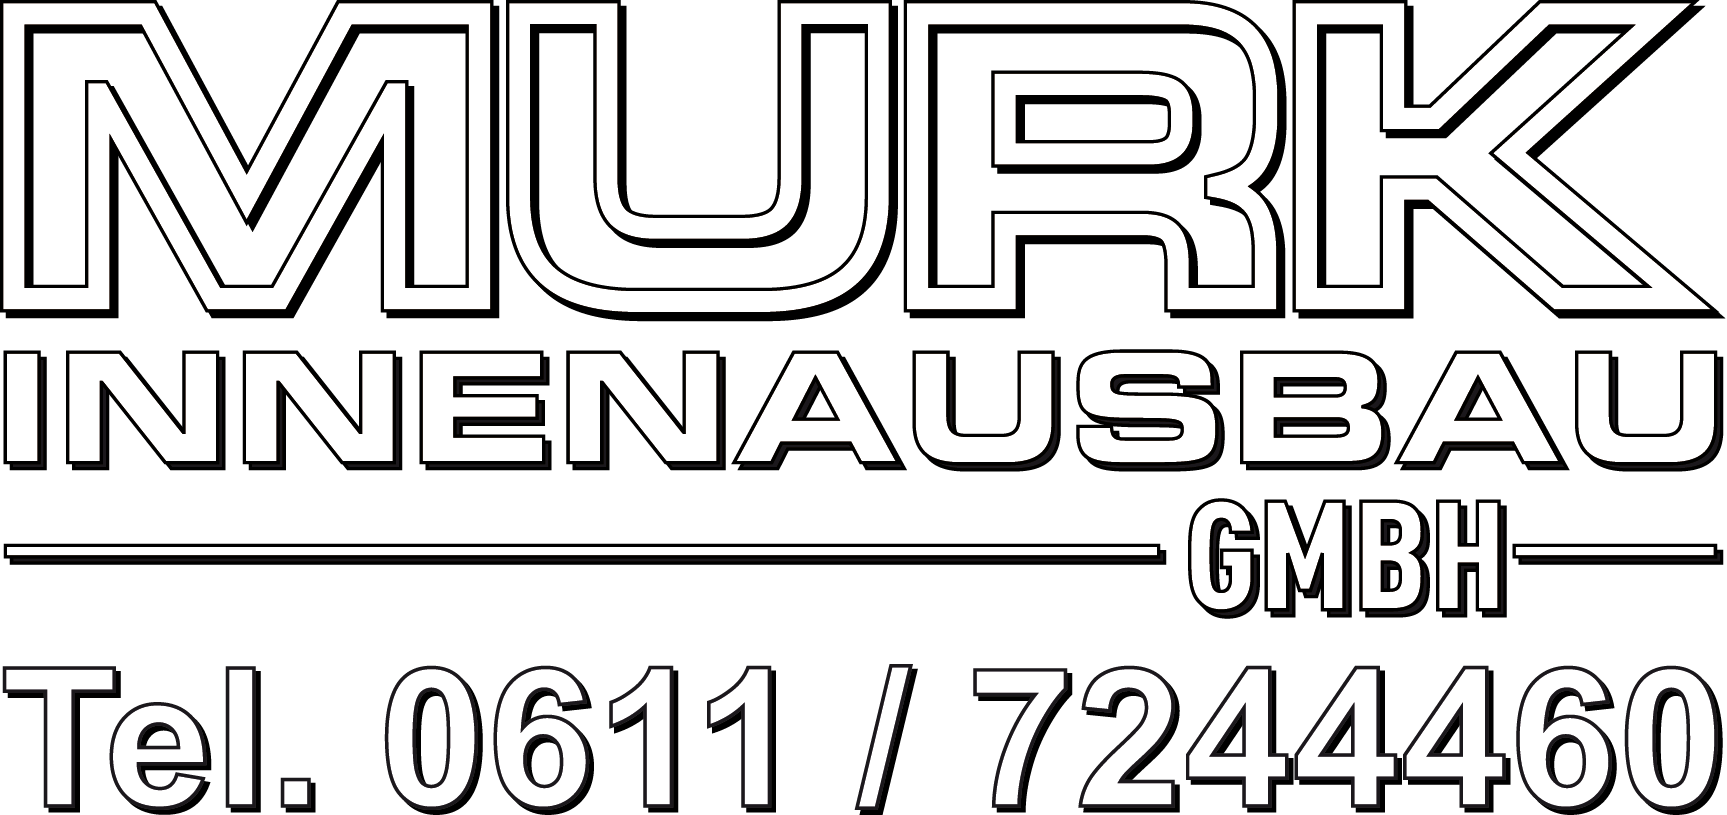 MURK-Innenausbau GmbH